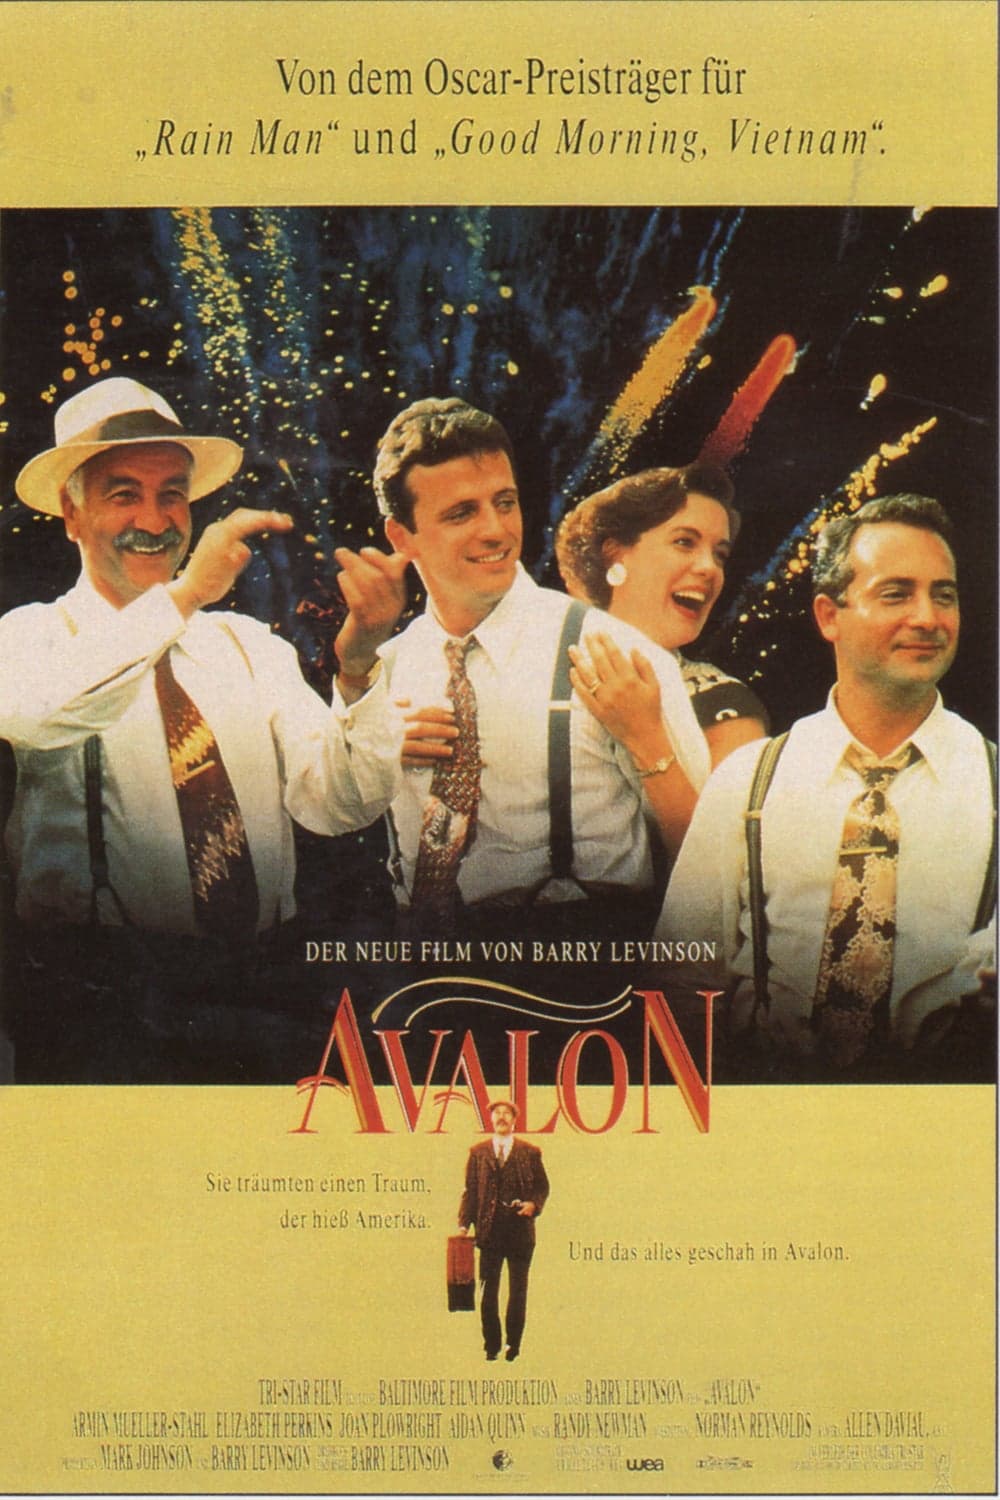 Plakat von "Avalon"